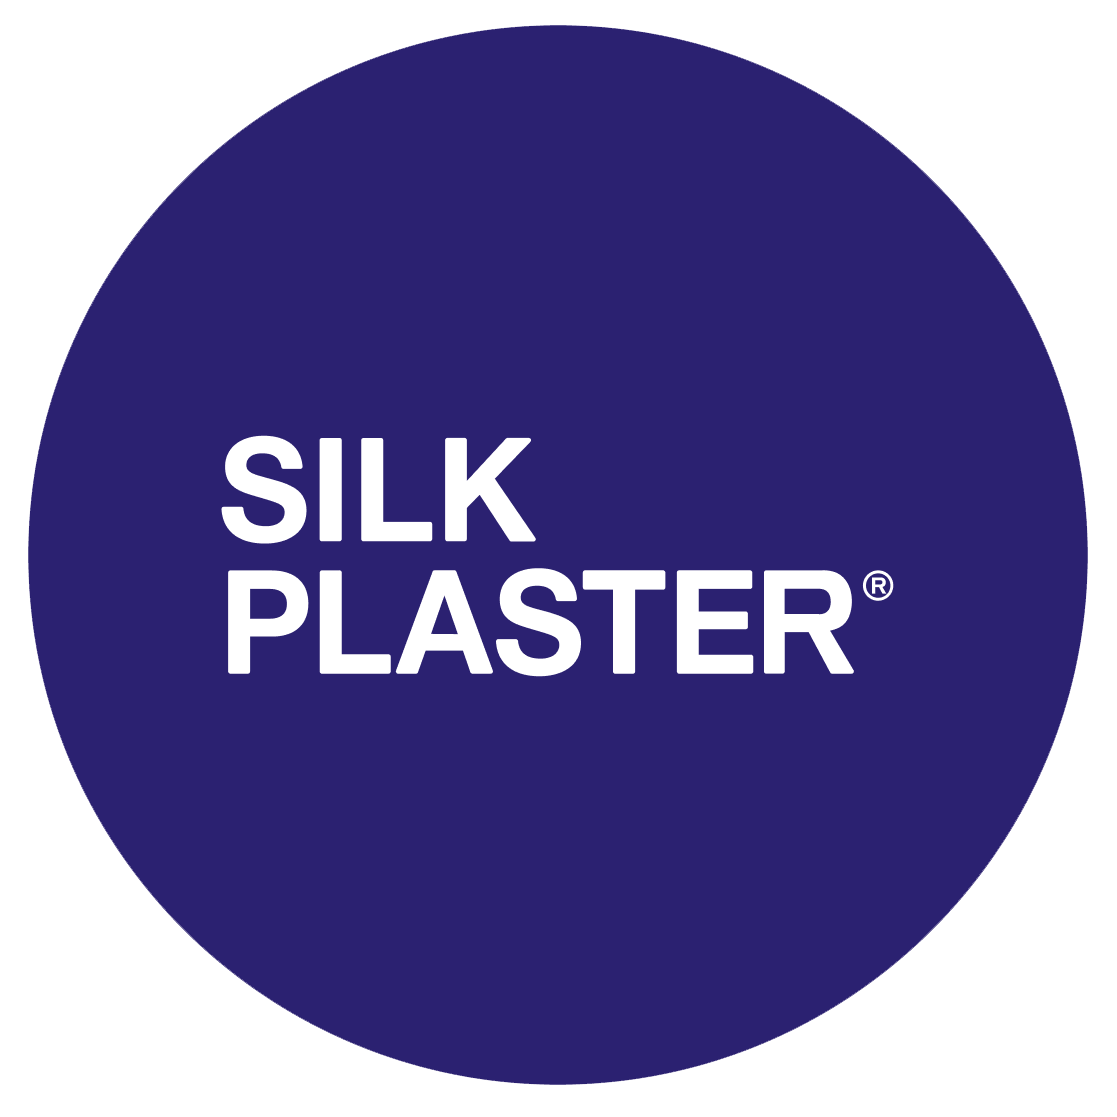 Silk Plaster Northern Ireland, Ireland and United Kingdom